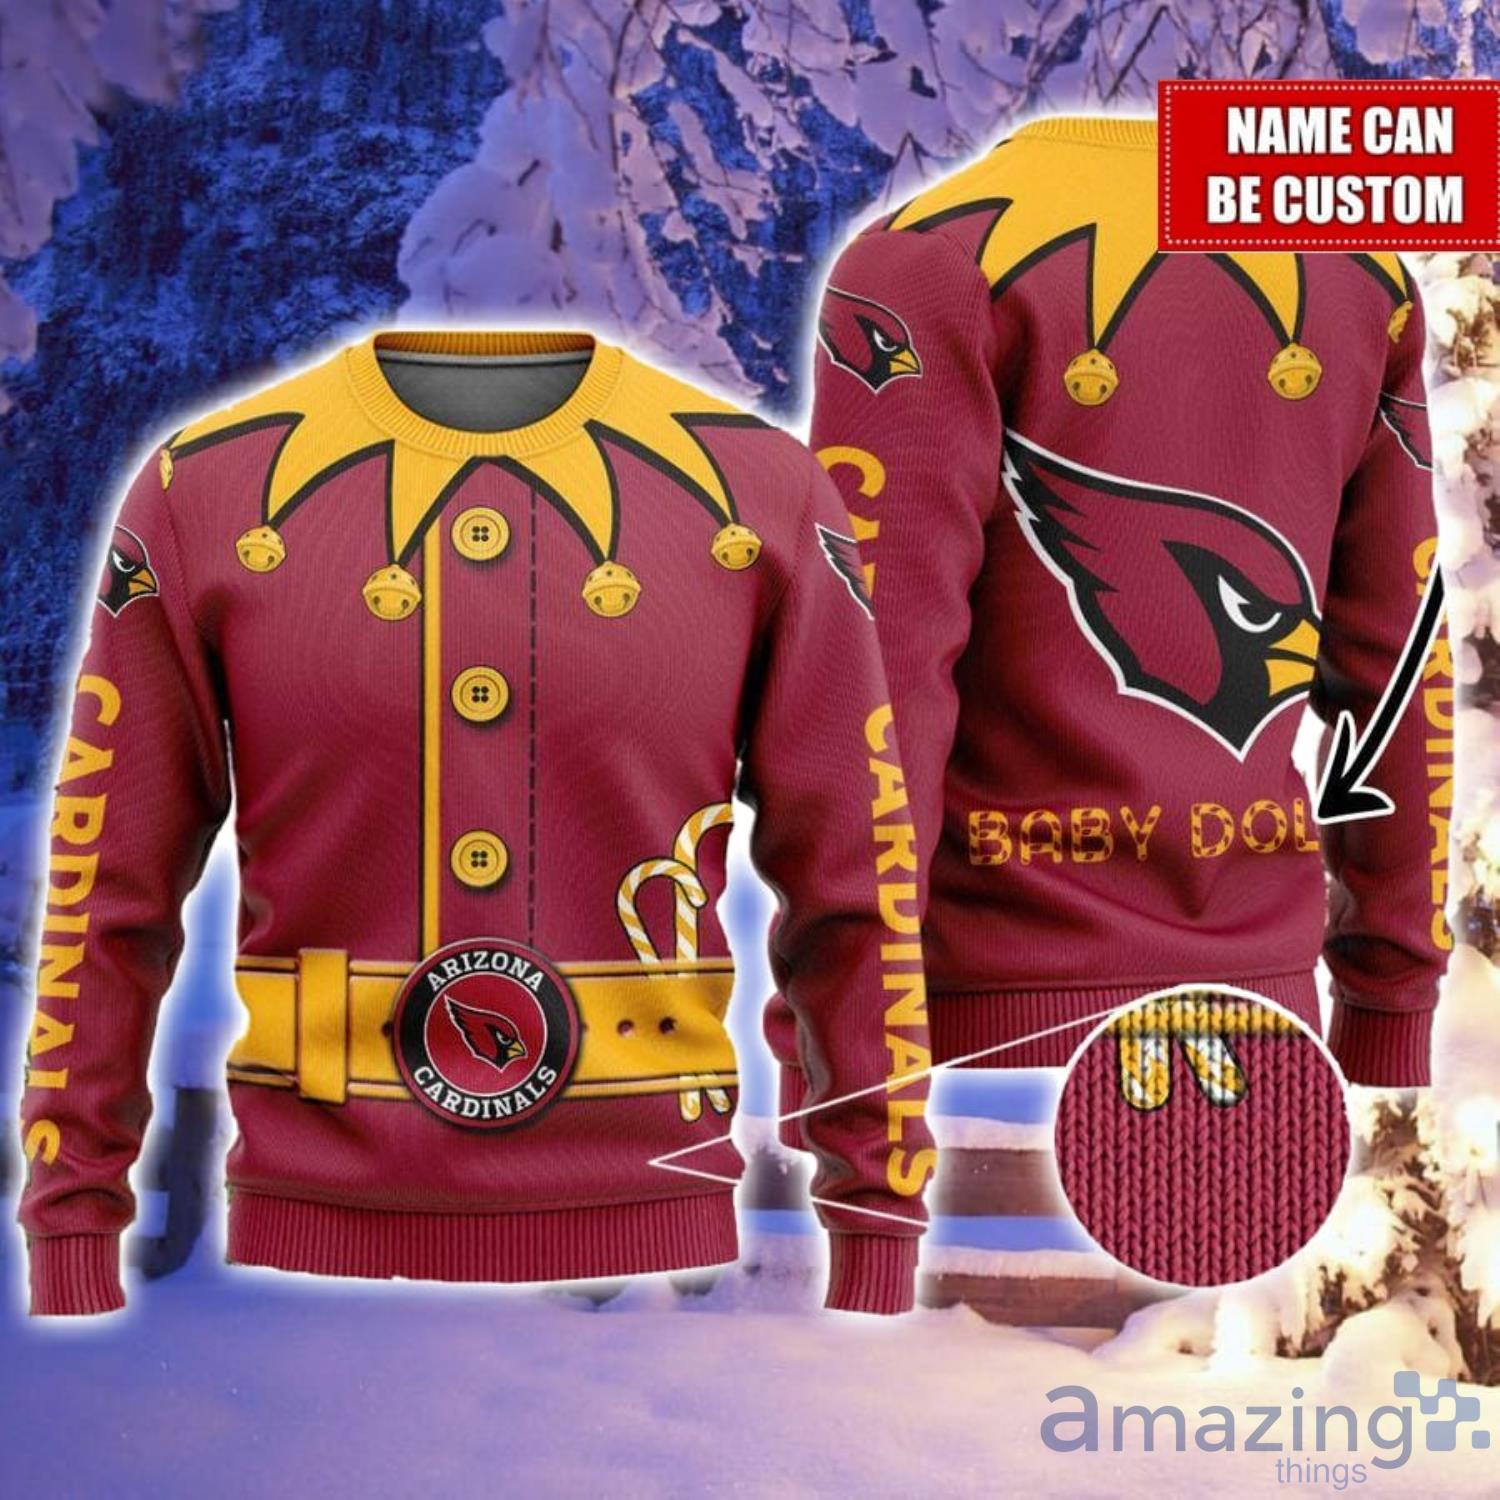 NFL Arizona Cardinals Custom Name Number Ugly Christmas Sweater V3